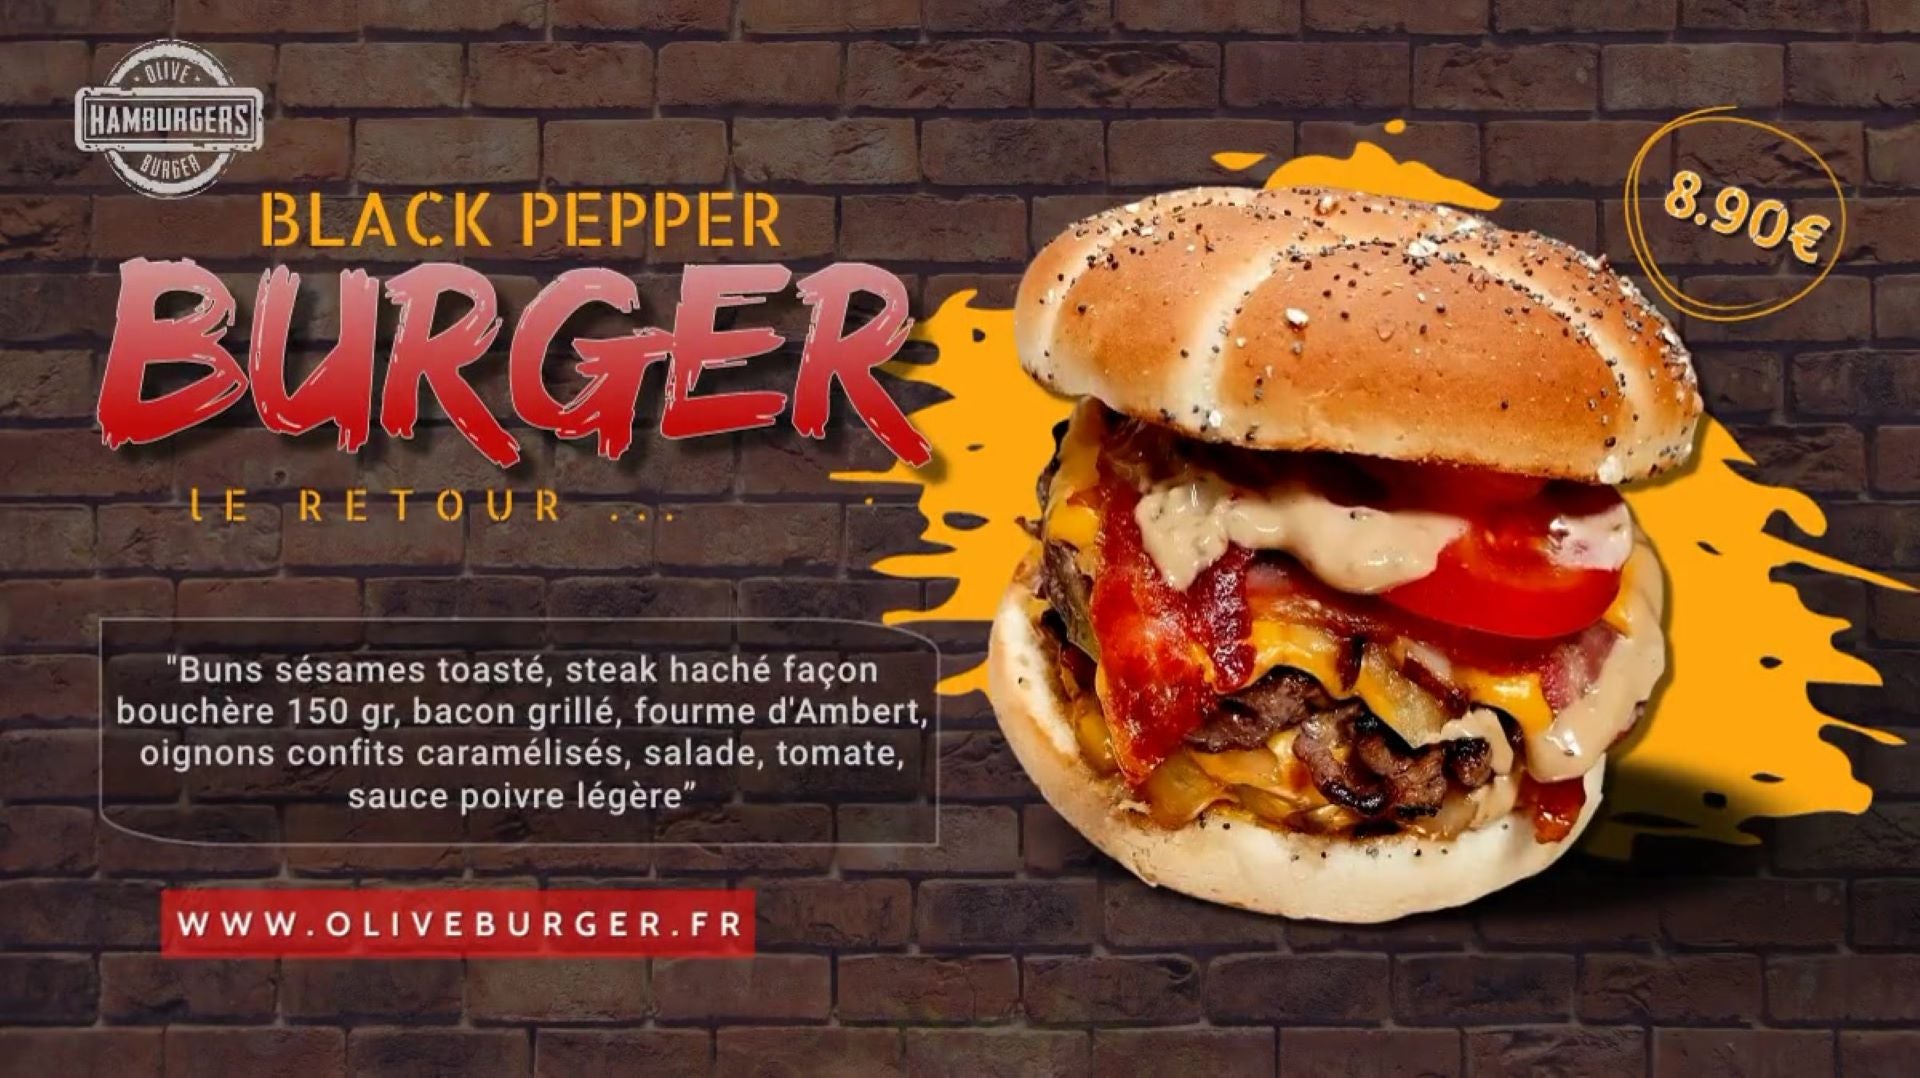 Black pepper burger